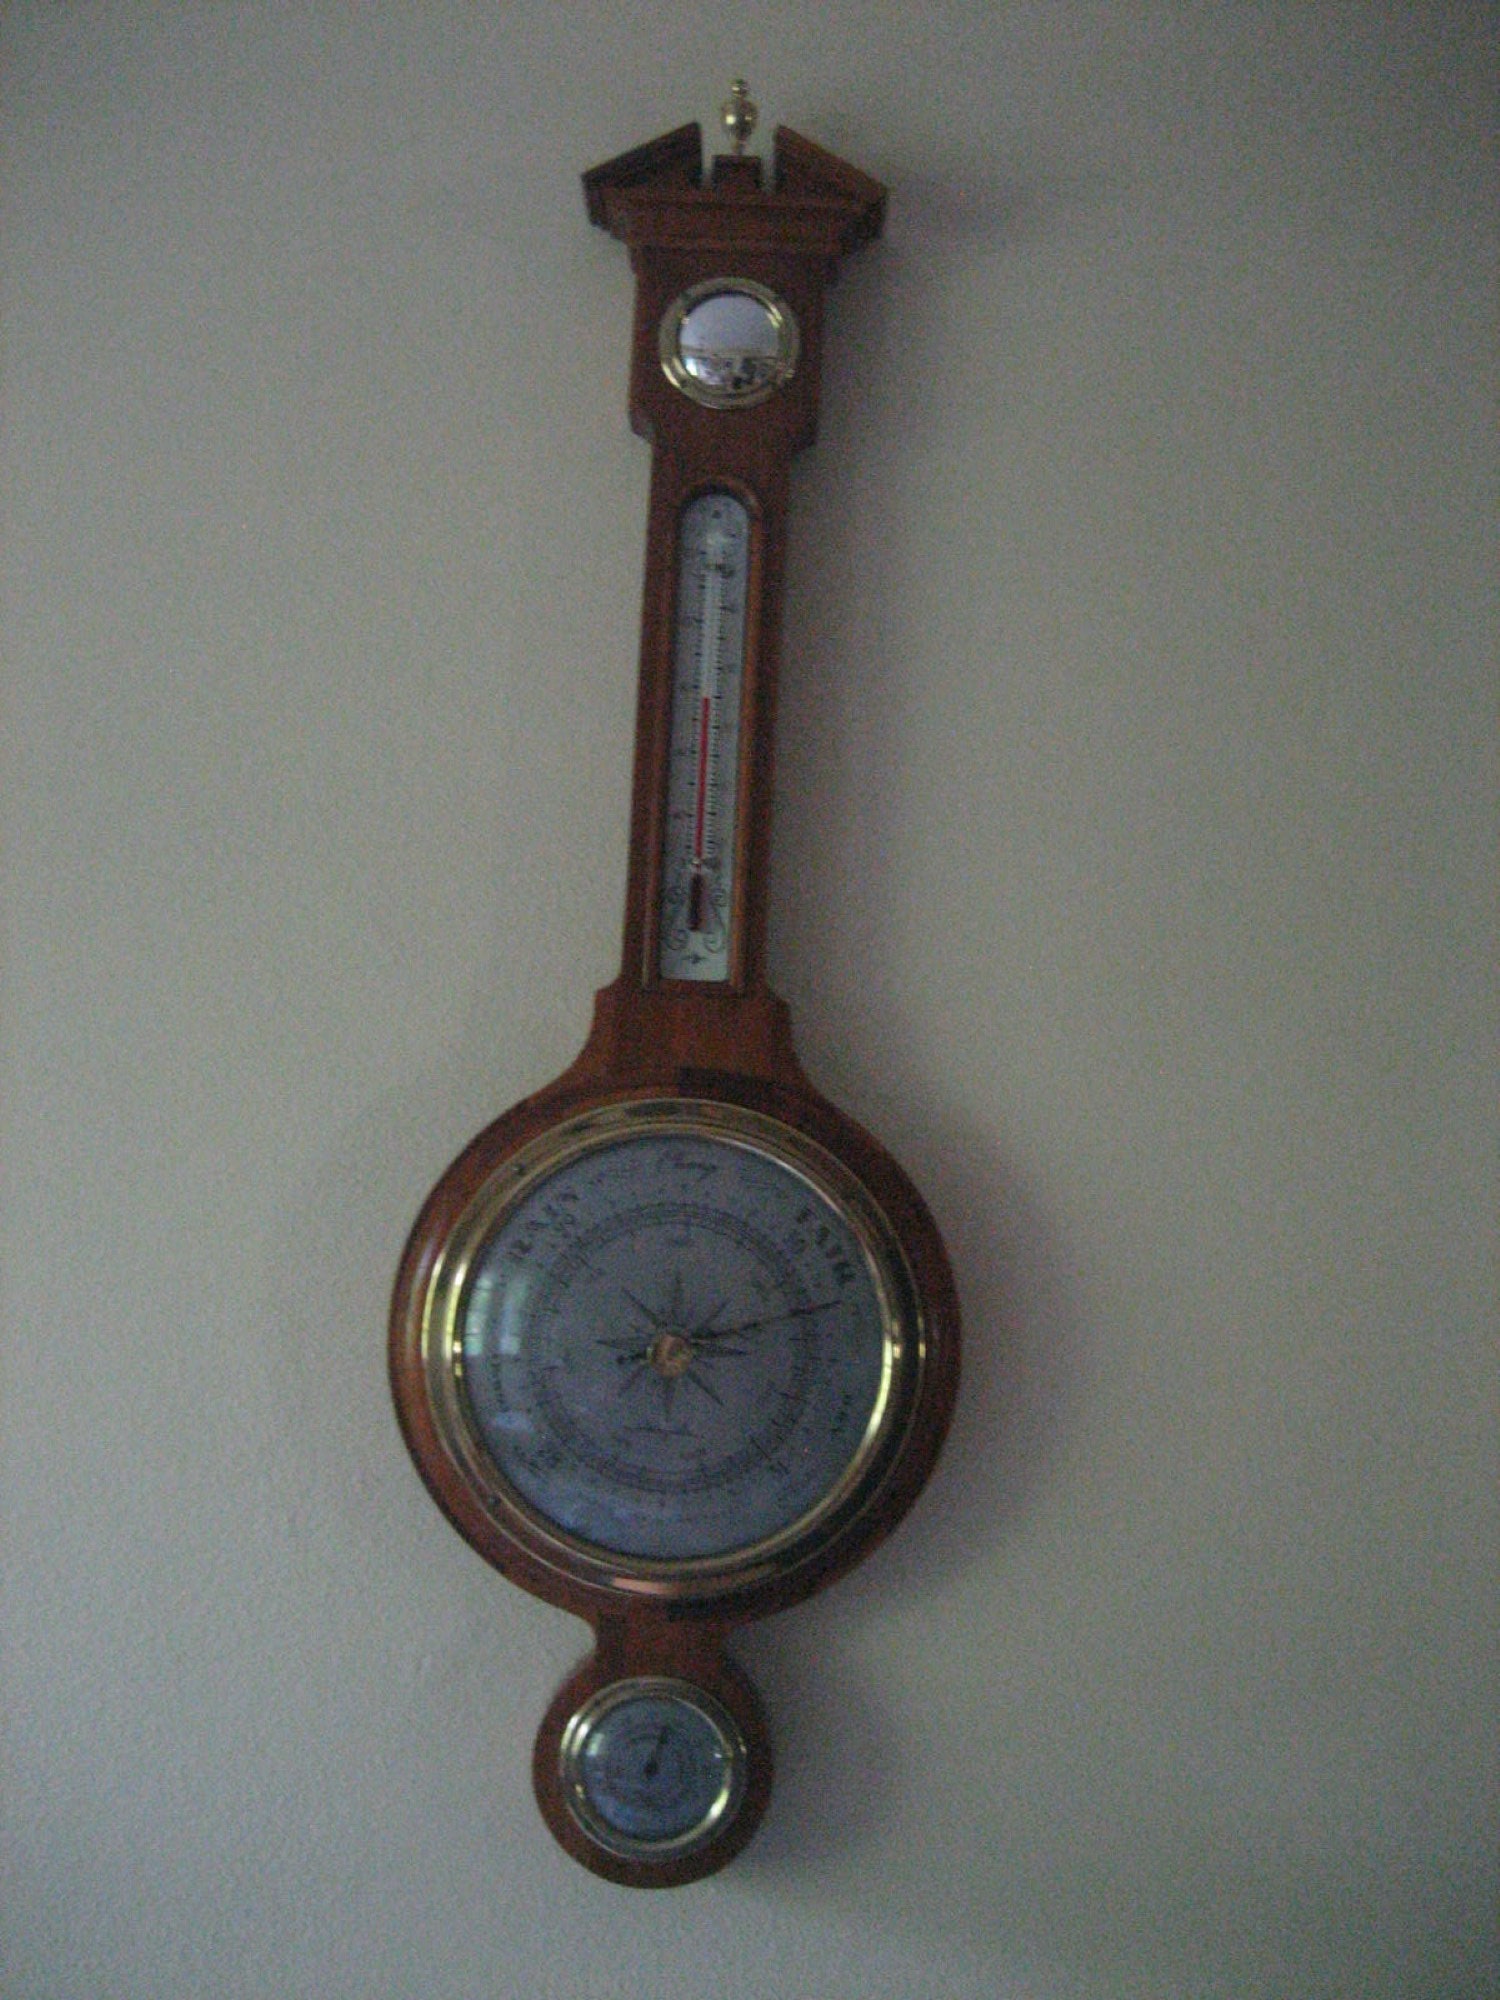 Banjo Weather Station w/ Barometer, Thermometer & Hygrometer